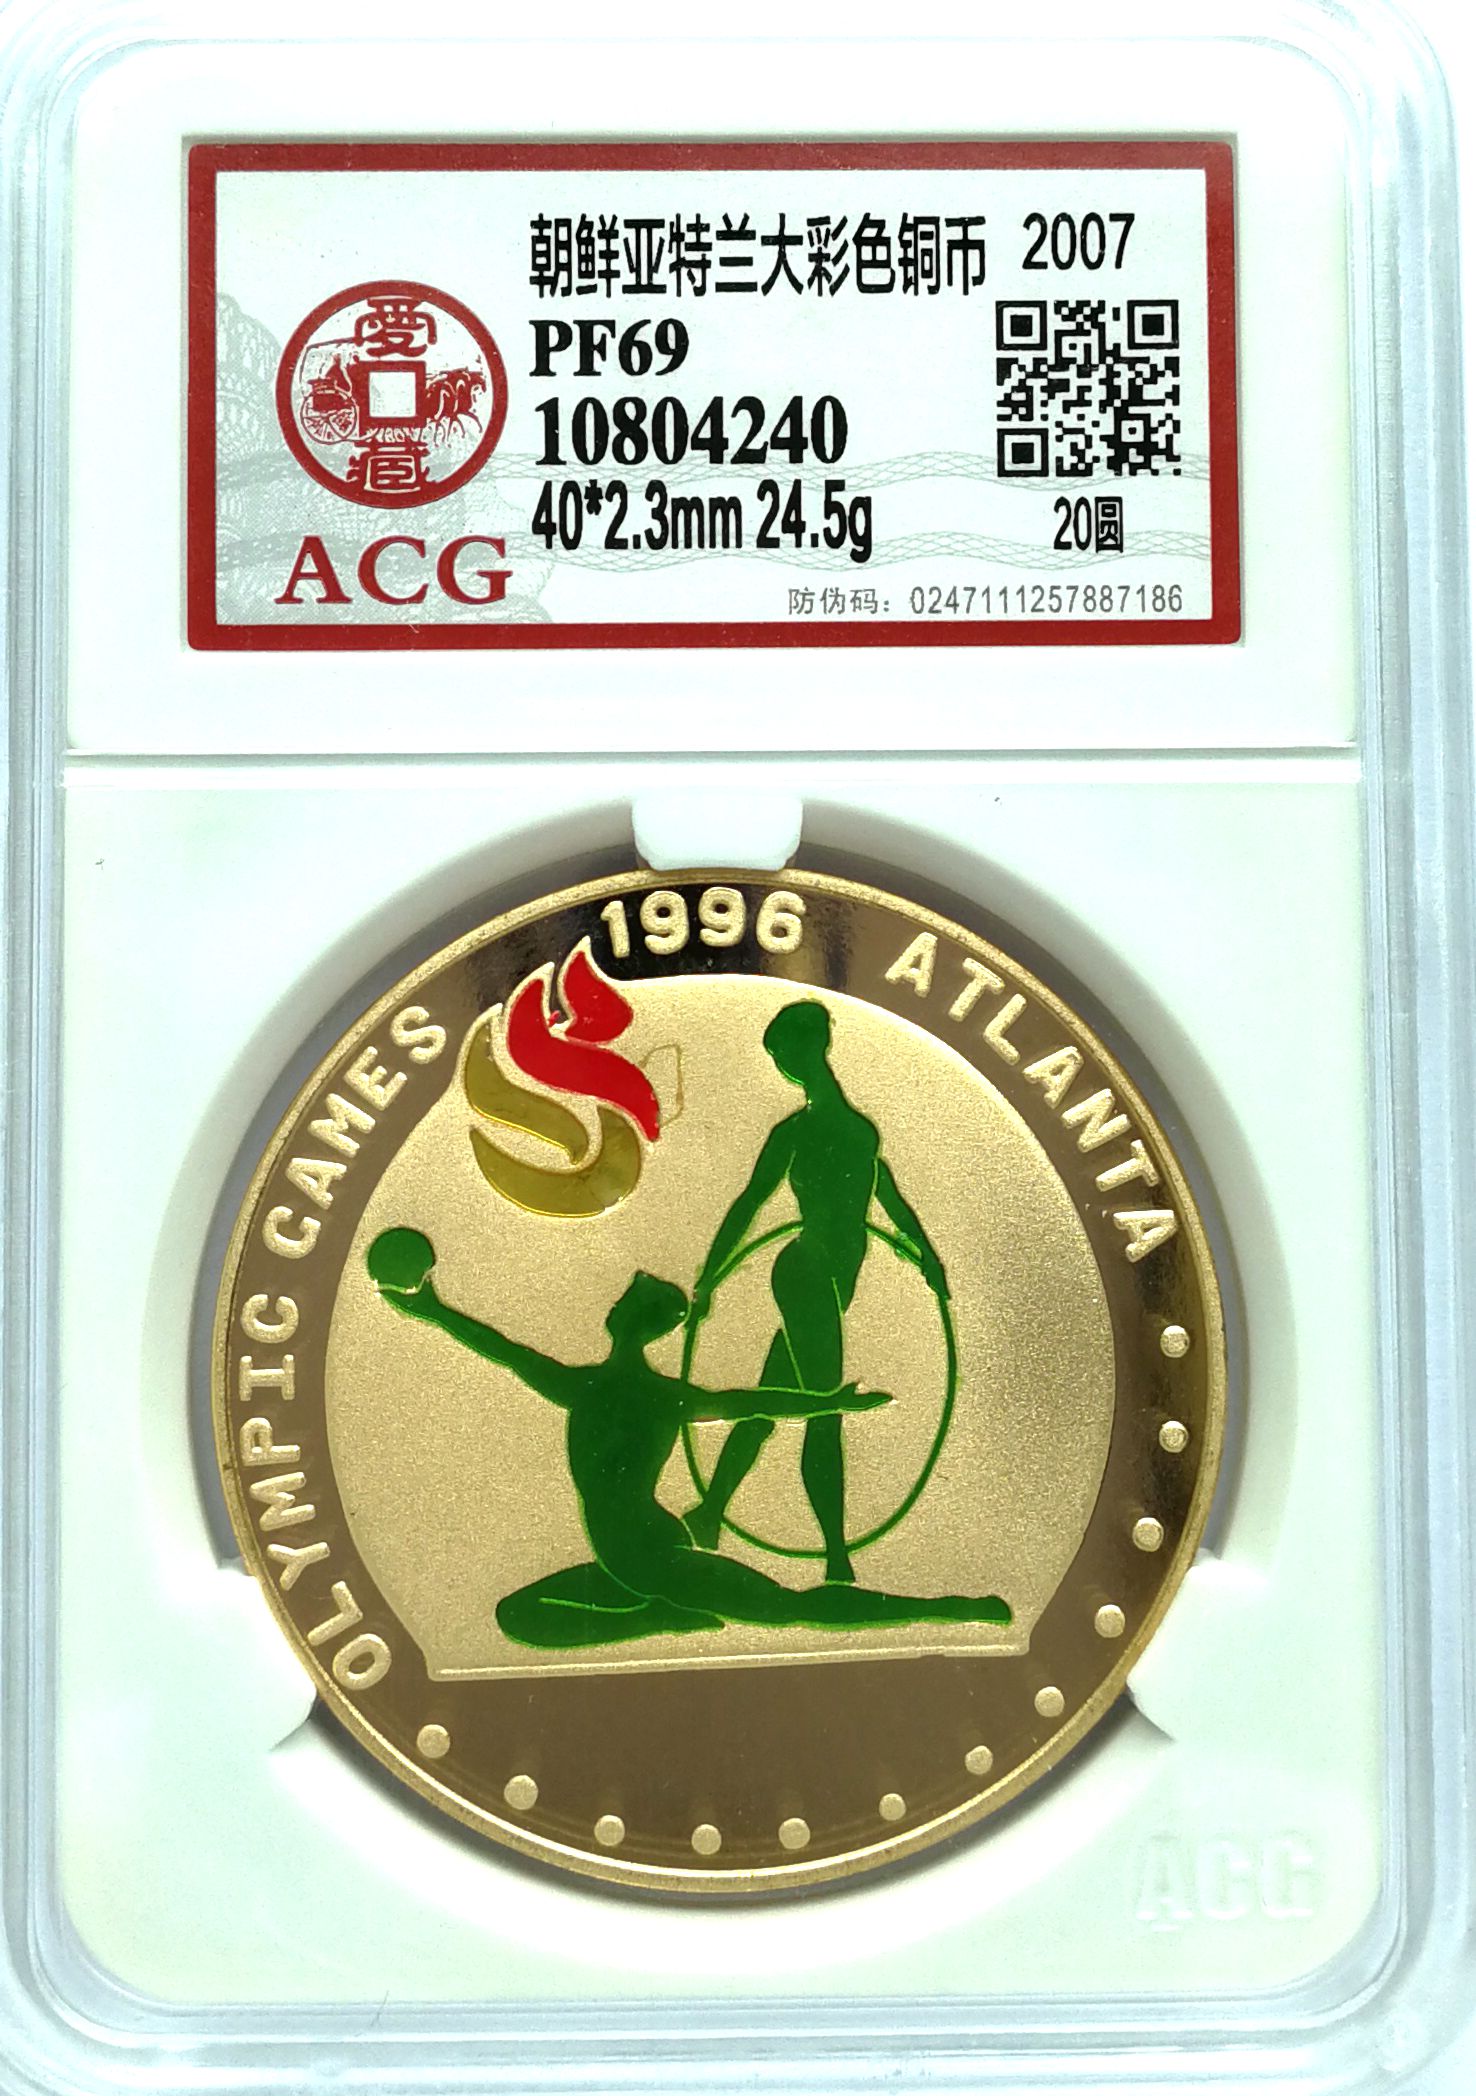 L3362, Korea 20 Won Proof Coin "Olympic Games Atlanta", Brass 2007